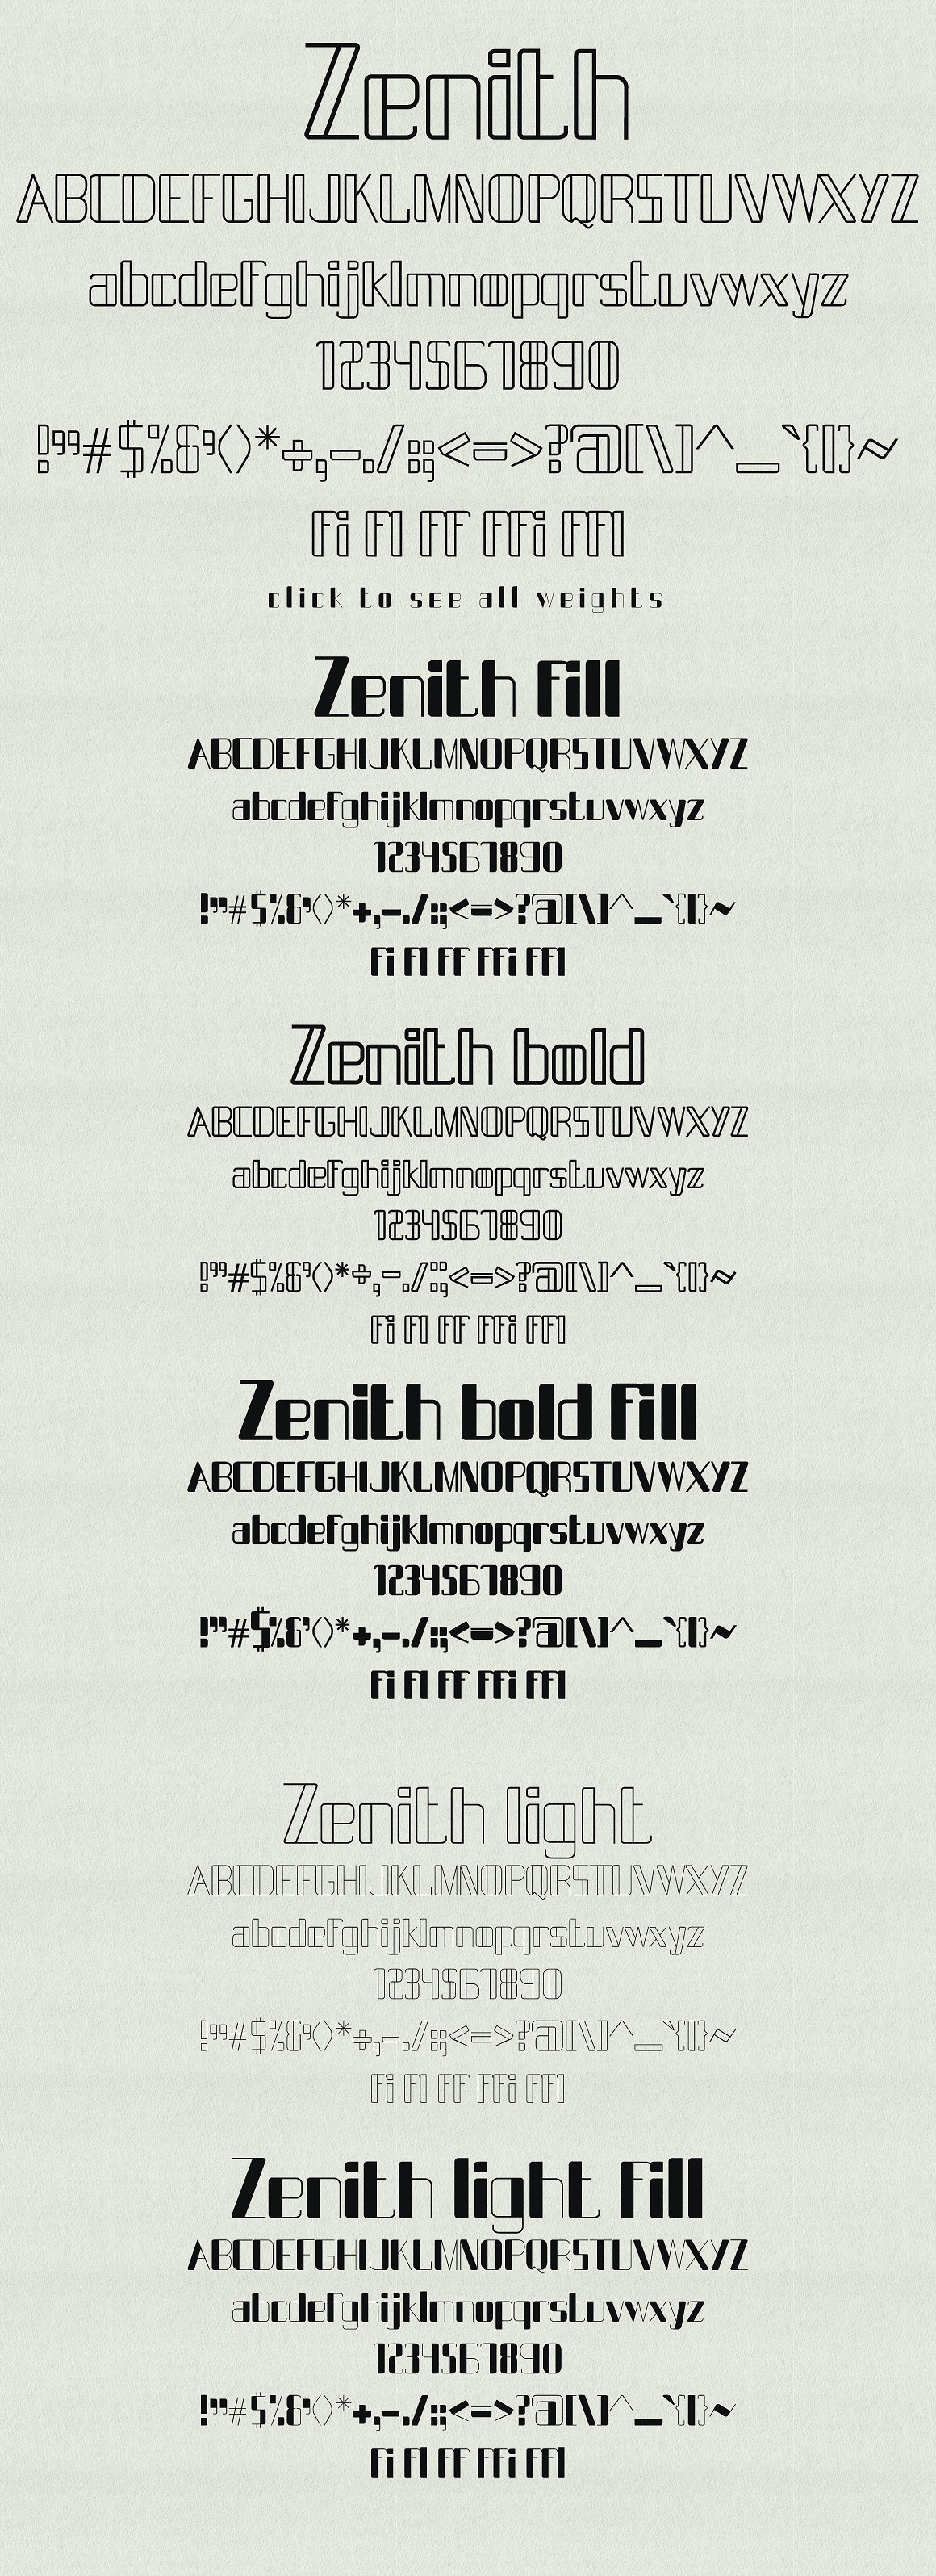 天顶字体Zenith typeface #610572